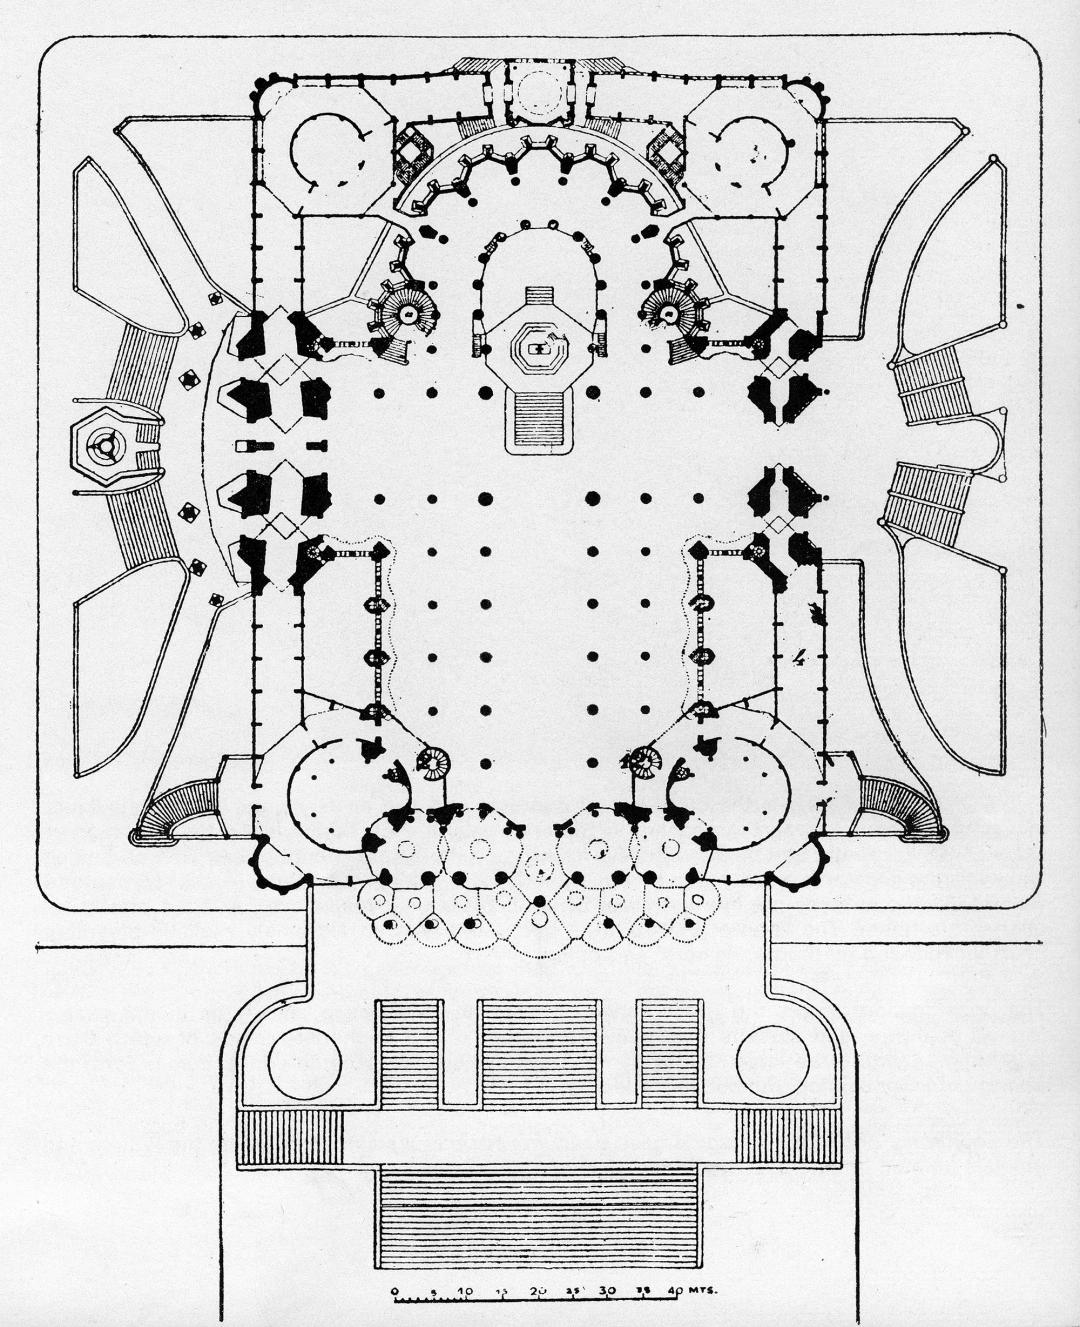 Plan for the Sagrada Familia